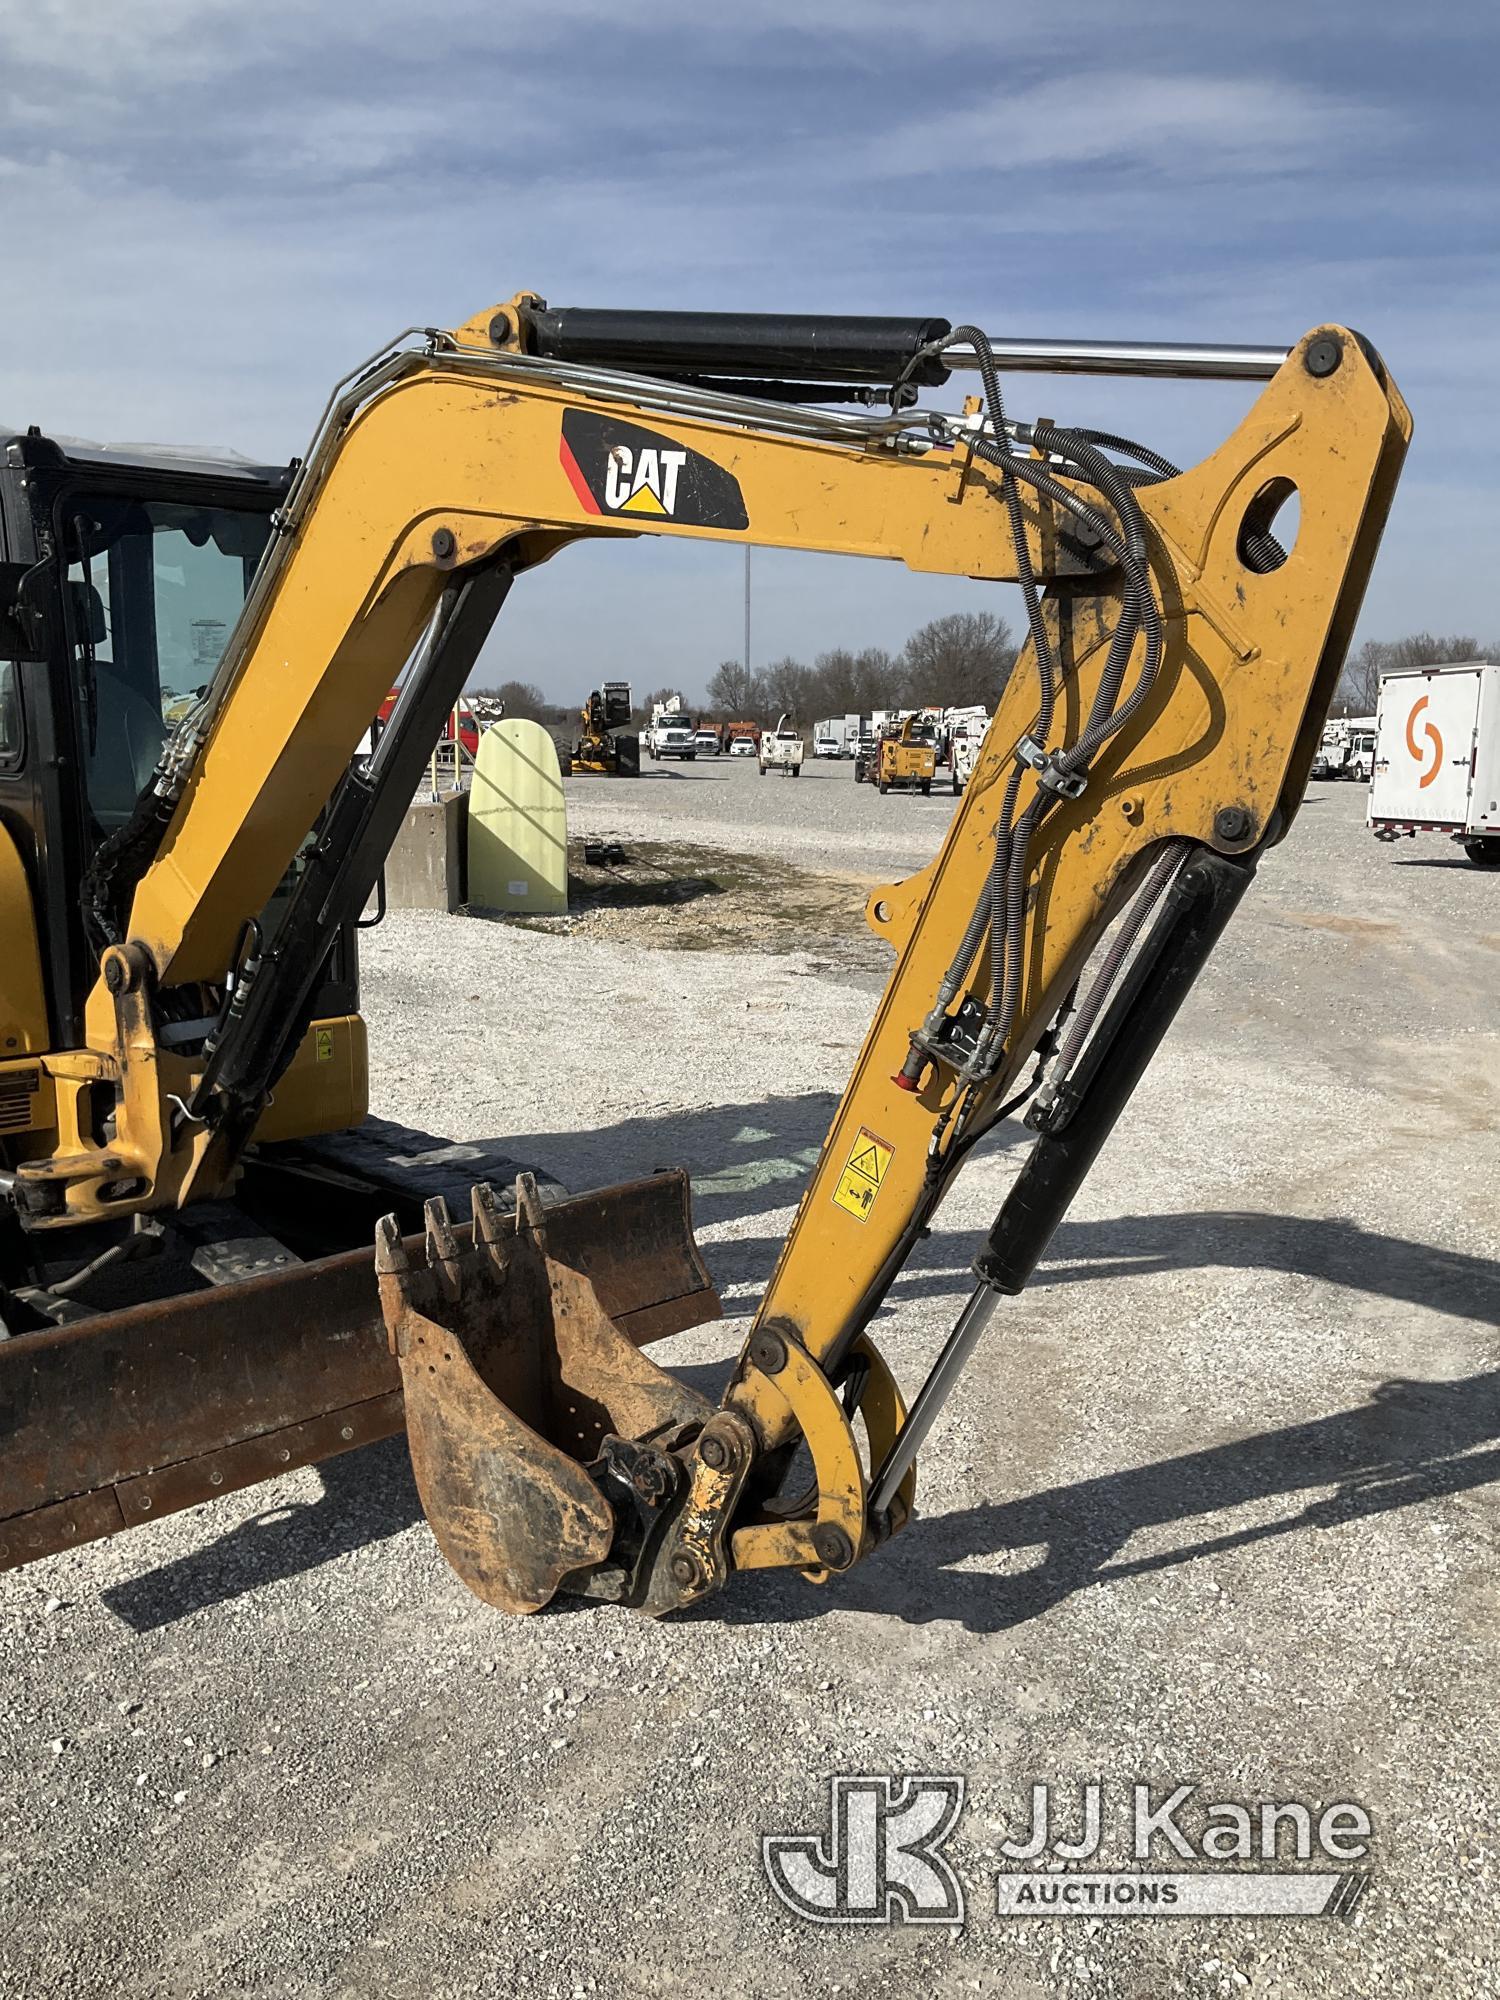 (Hawk Point, MO) Caterpillar 305E2 Mini Hydraulic Excavator Runs & Operates) (Major Roof Damage and